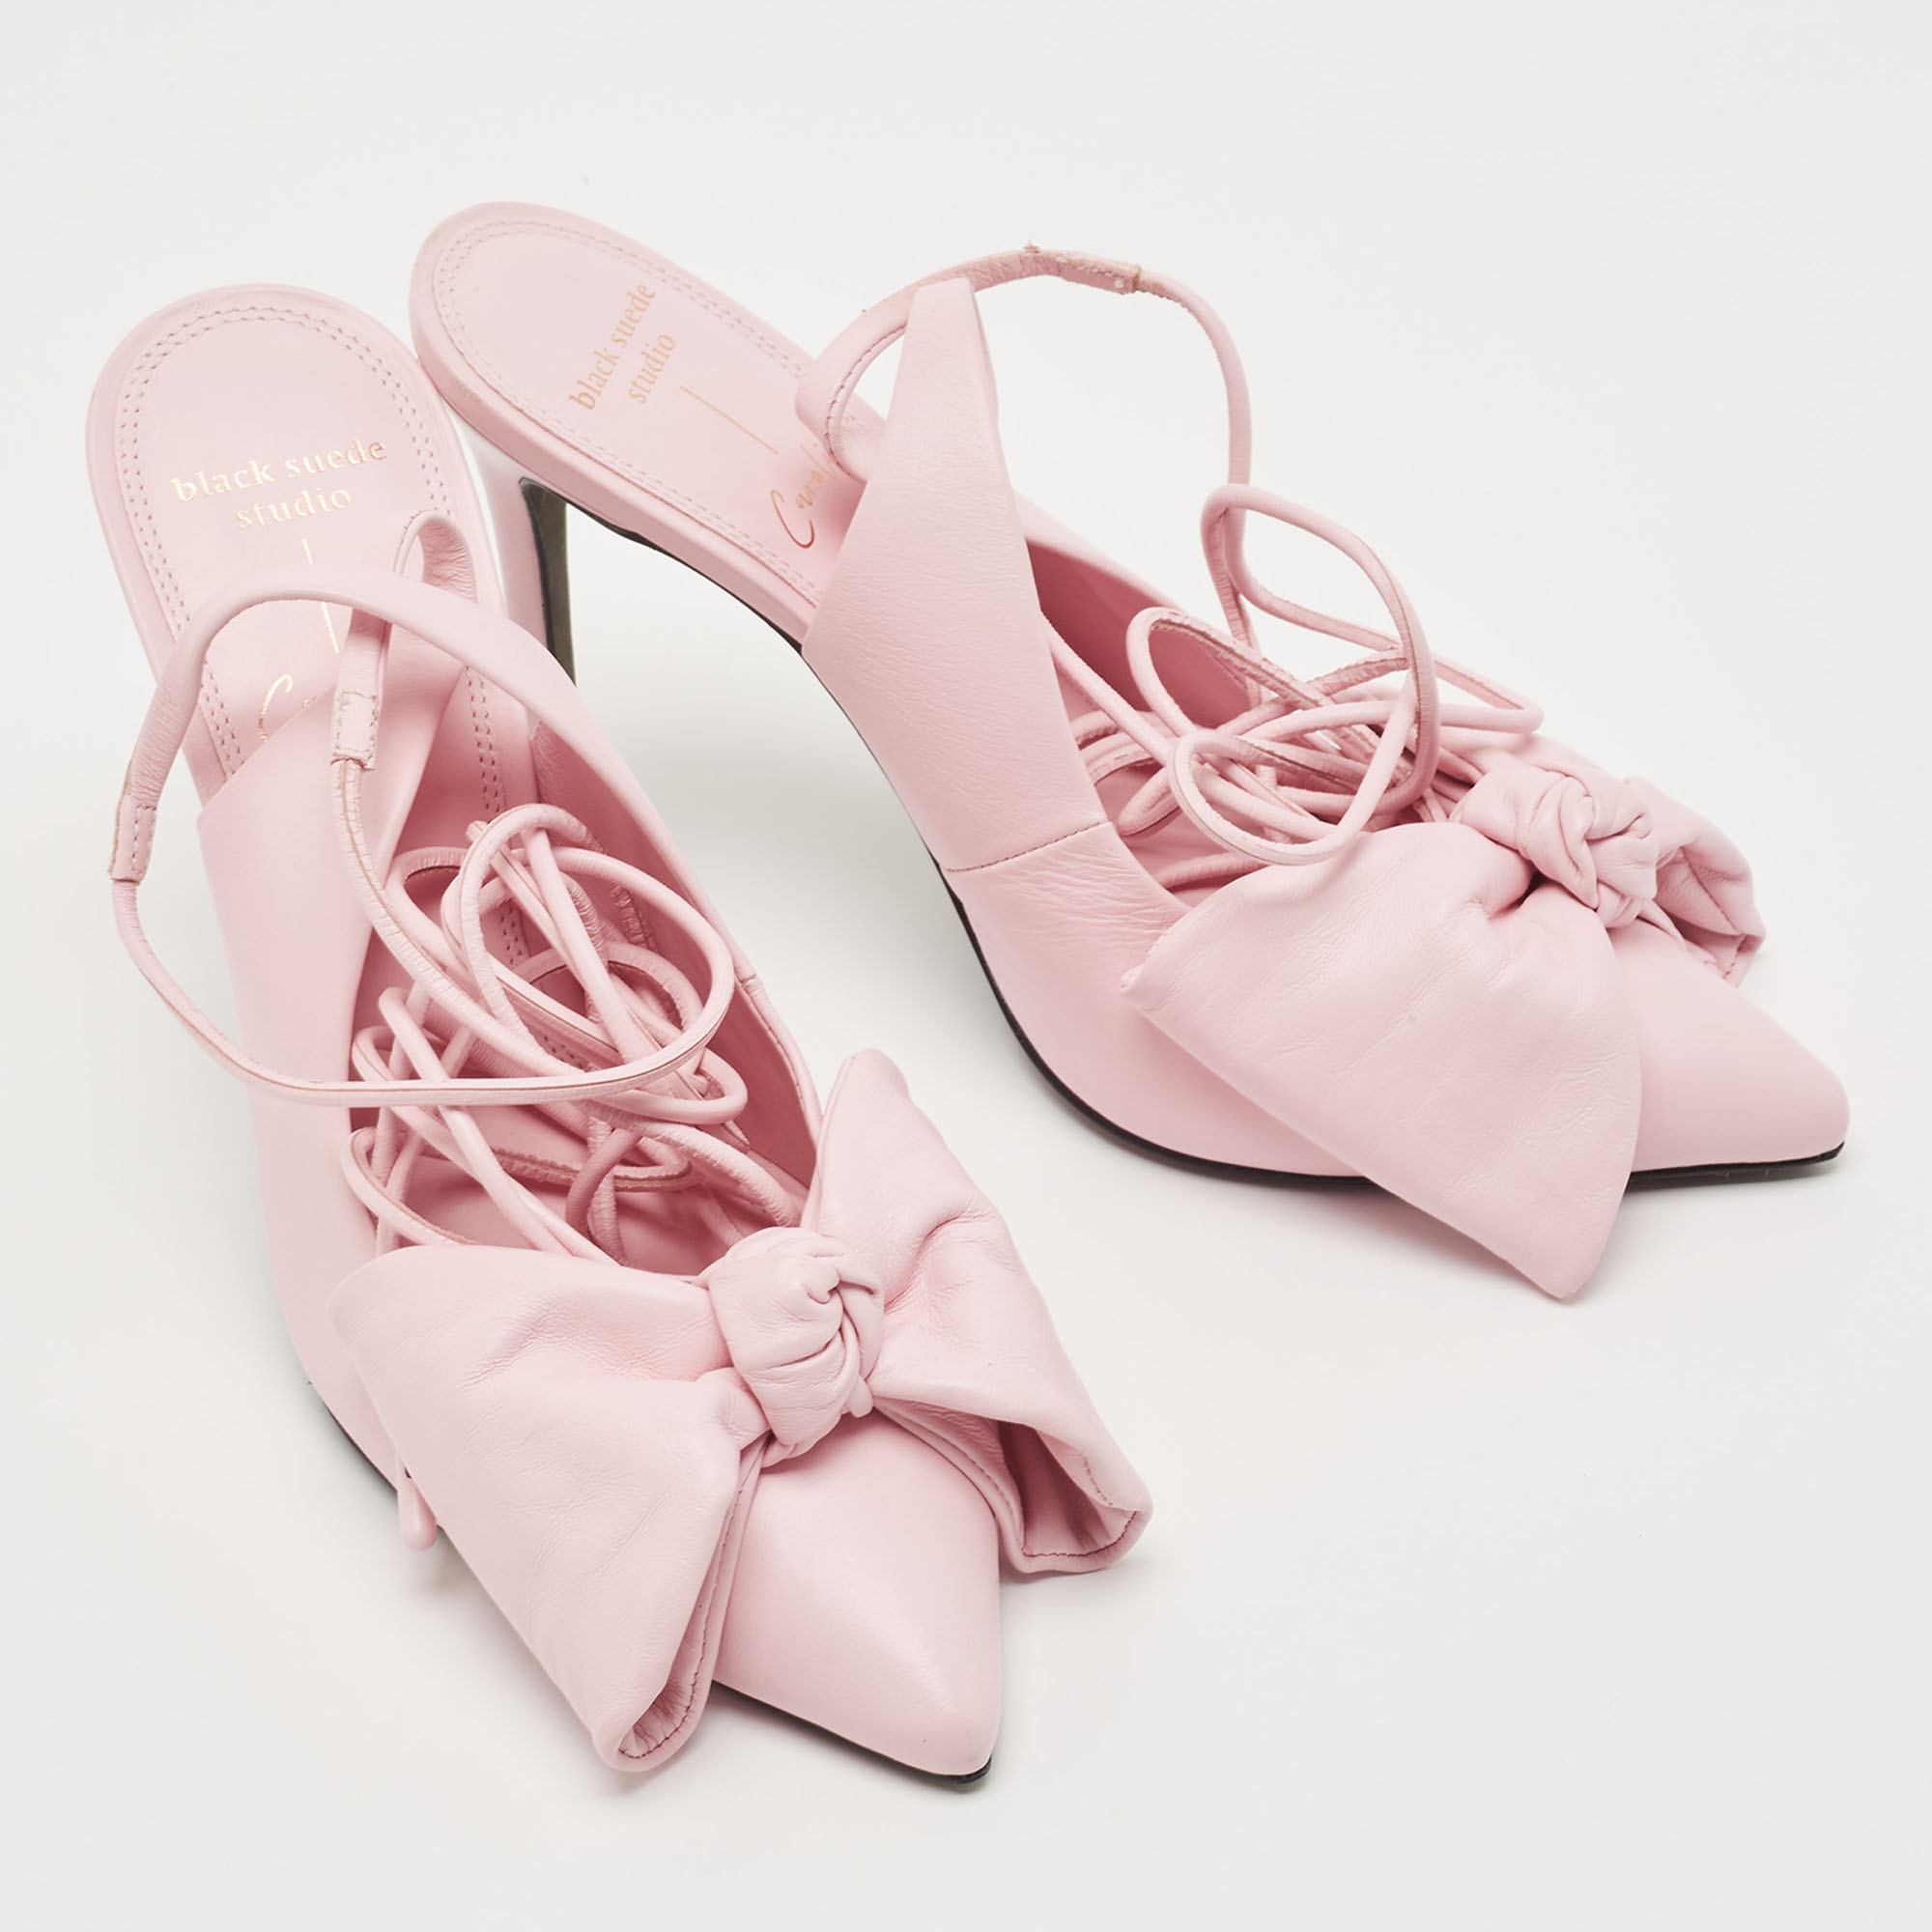 Black Suede Studio X Caroline Stanbury Pink Leather Ankle Wrap Pumps Size 38